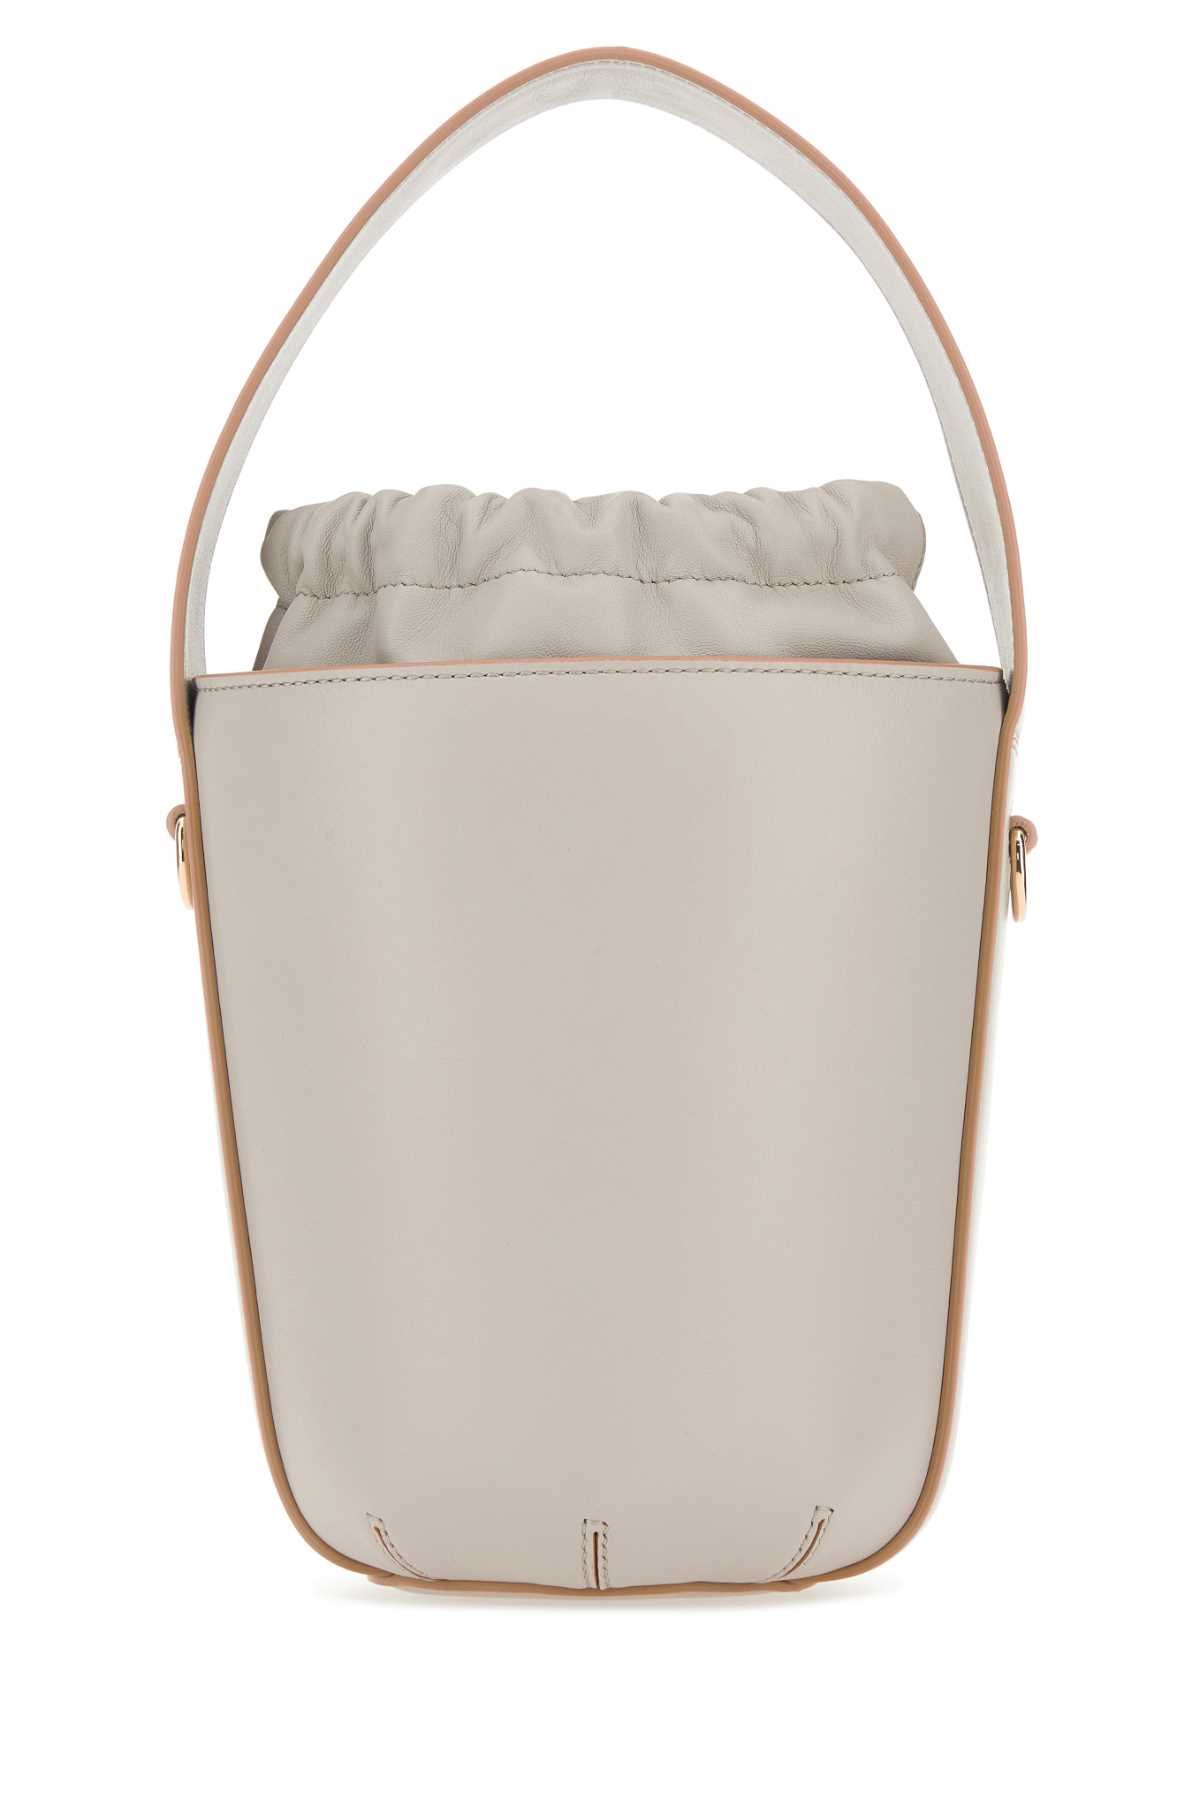 Chloé Light Pink Leather Bucket Bag